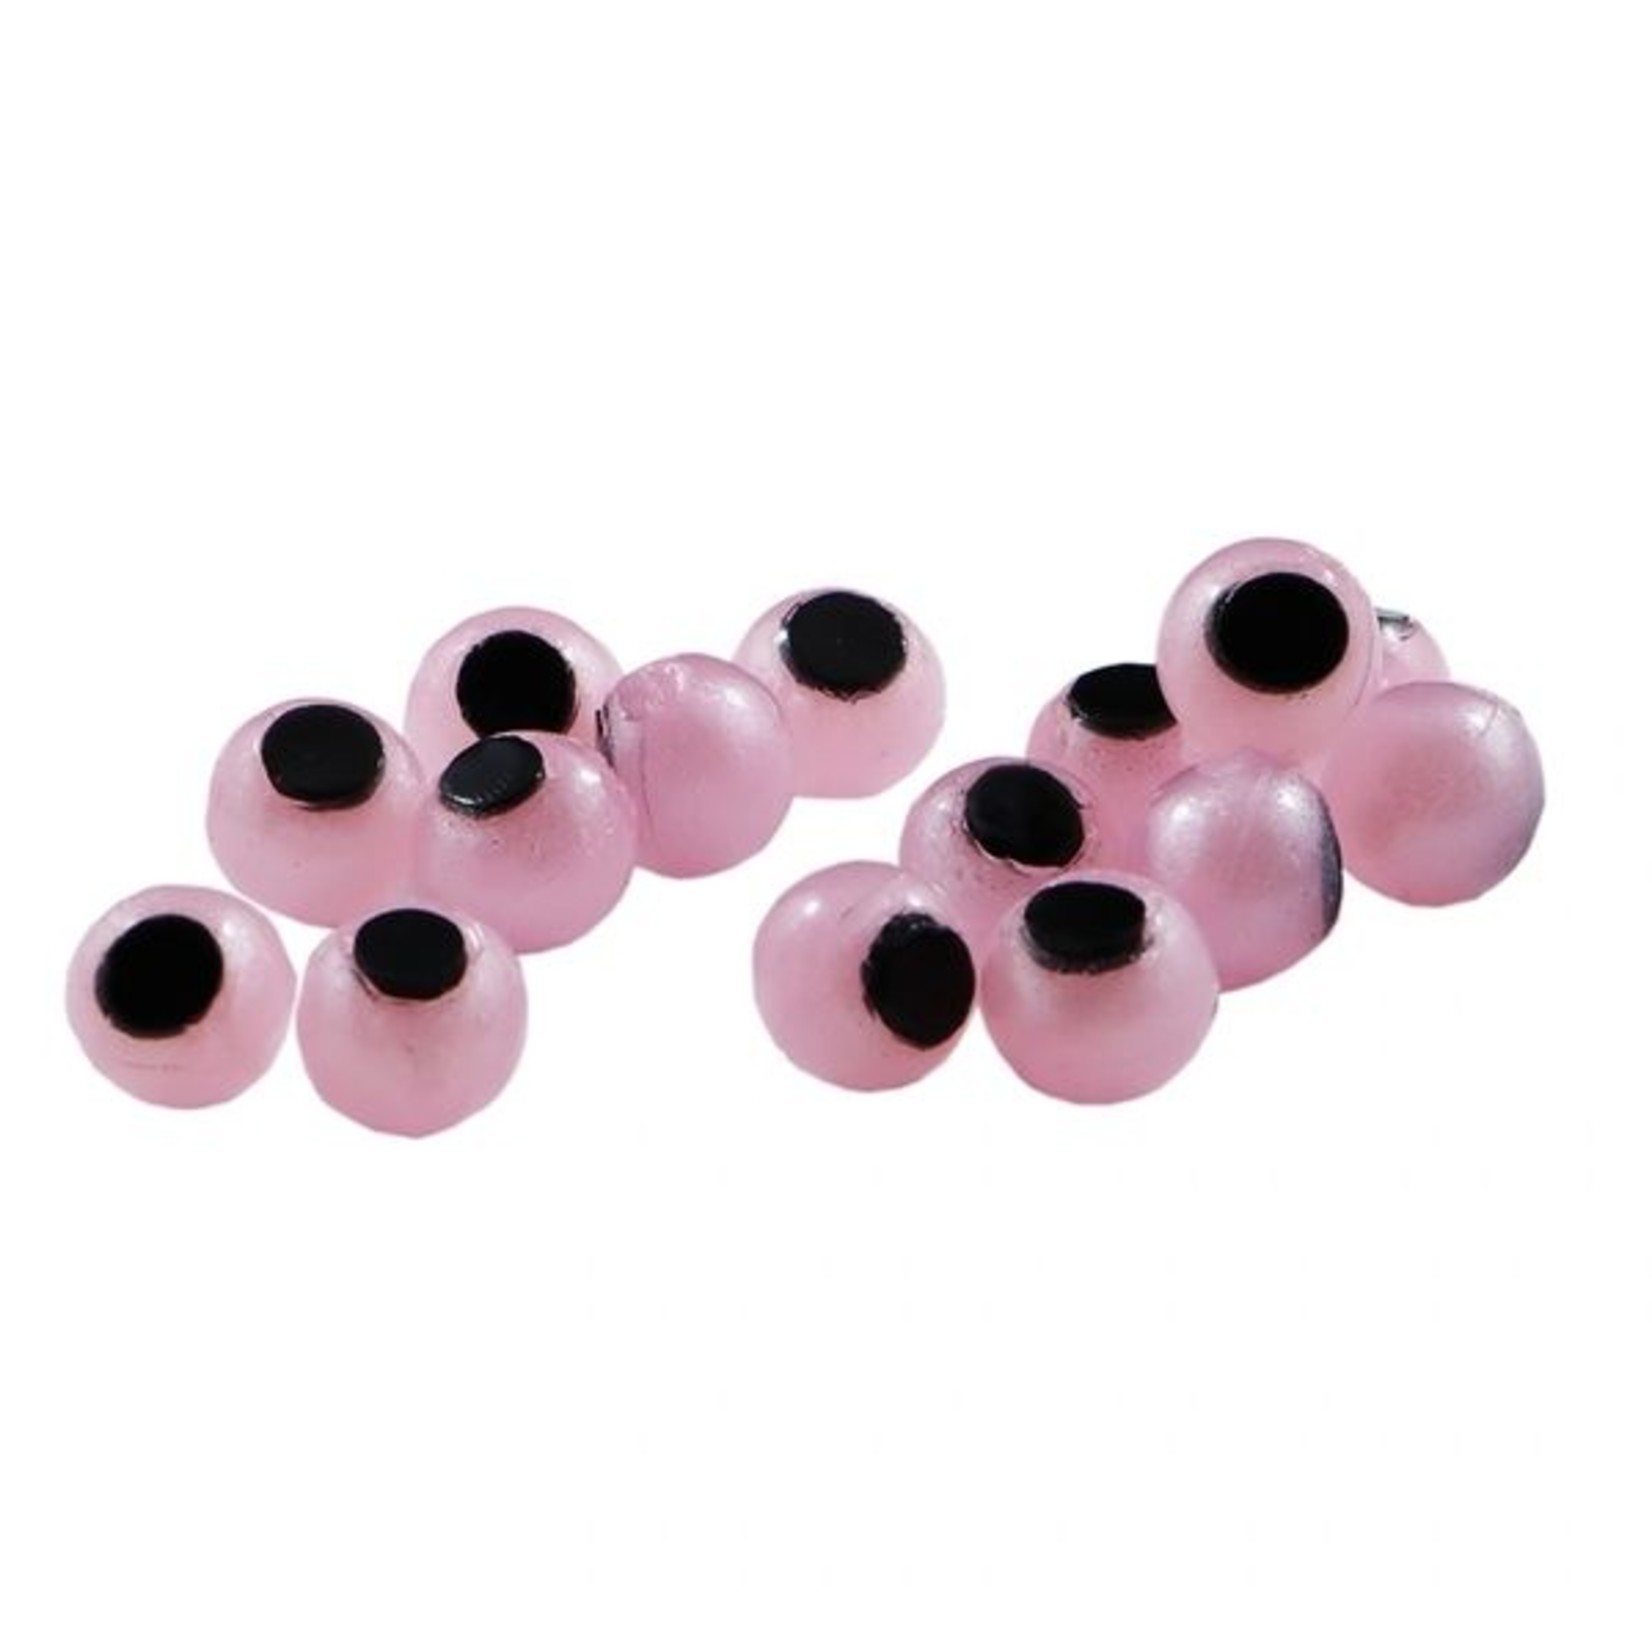 Cleardrift Cleardrift Embryo Soft Beads Pink Pearl w/Red Embryo 10mm